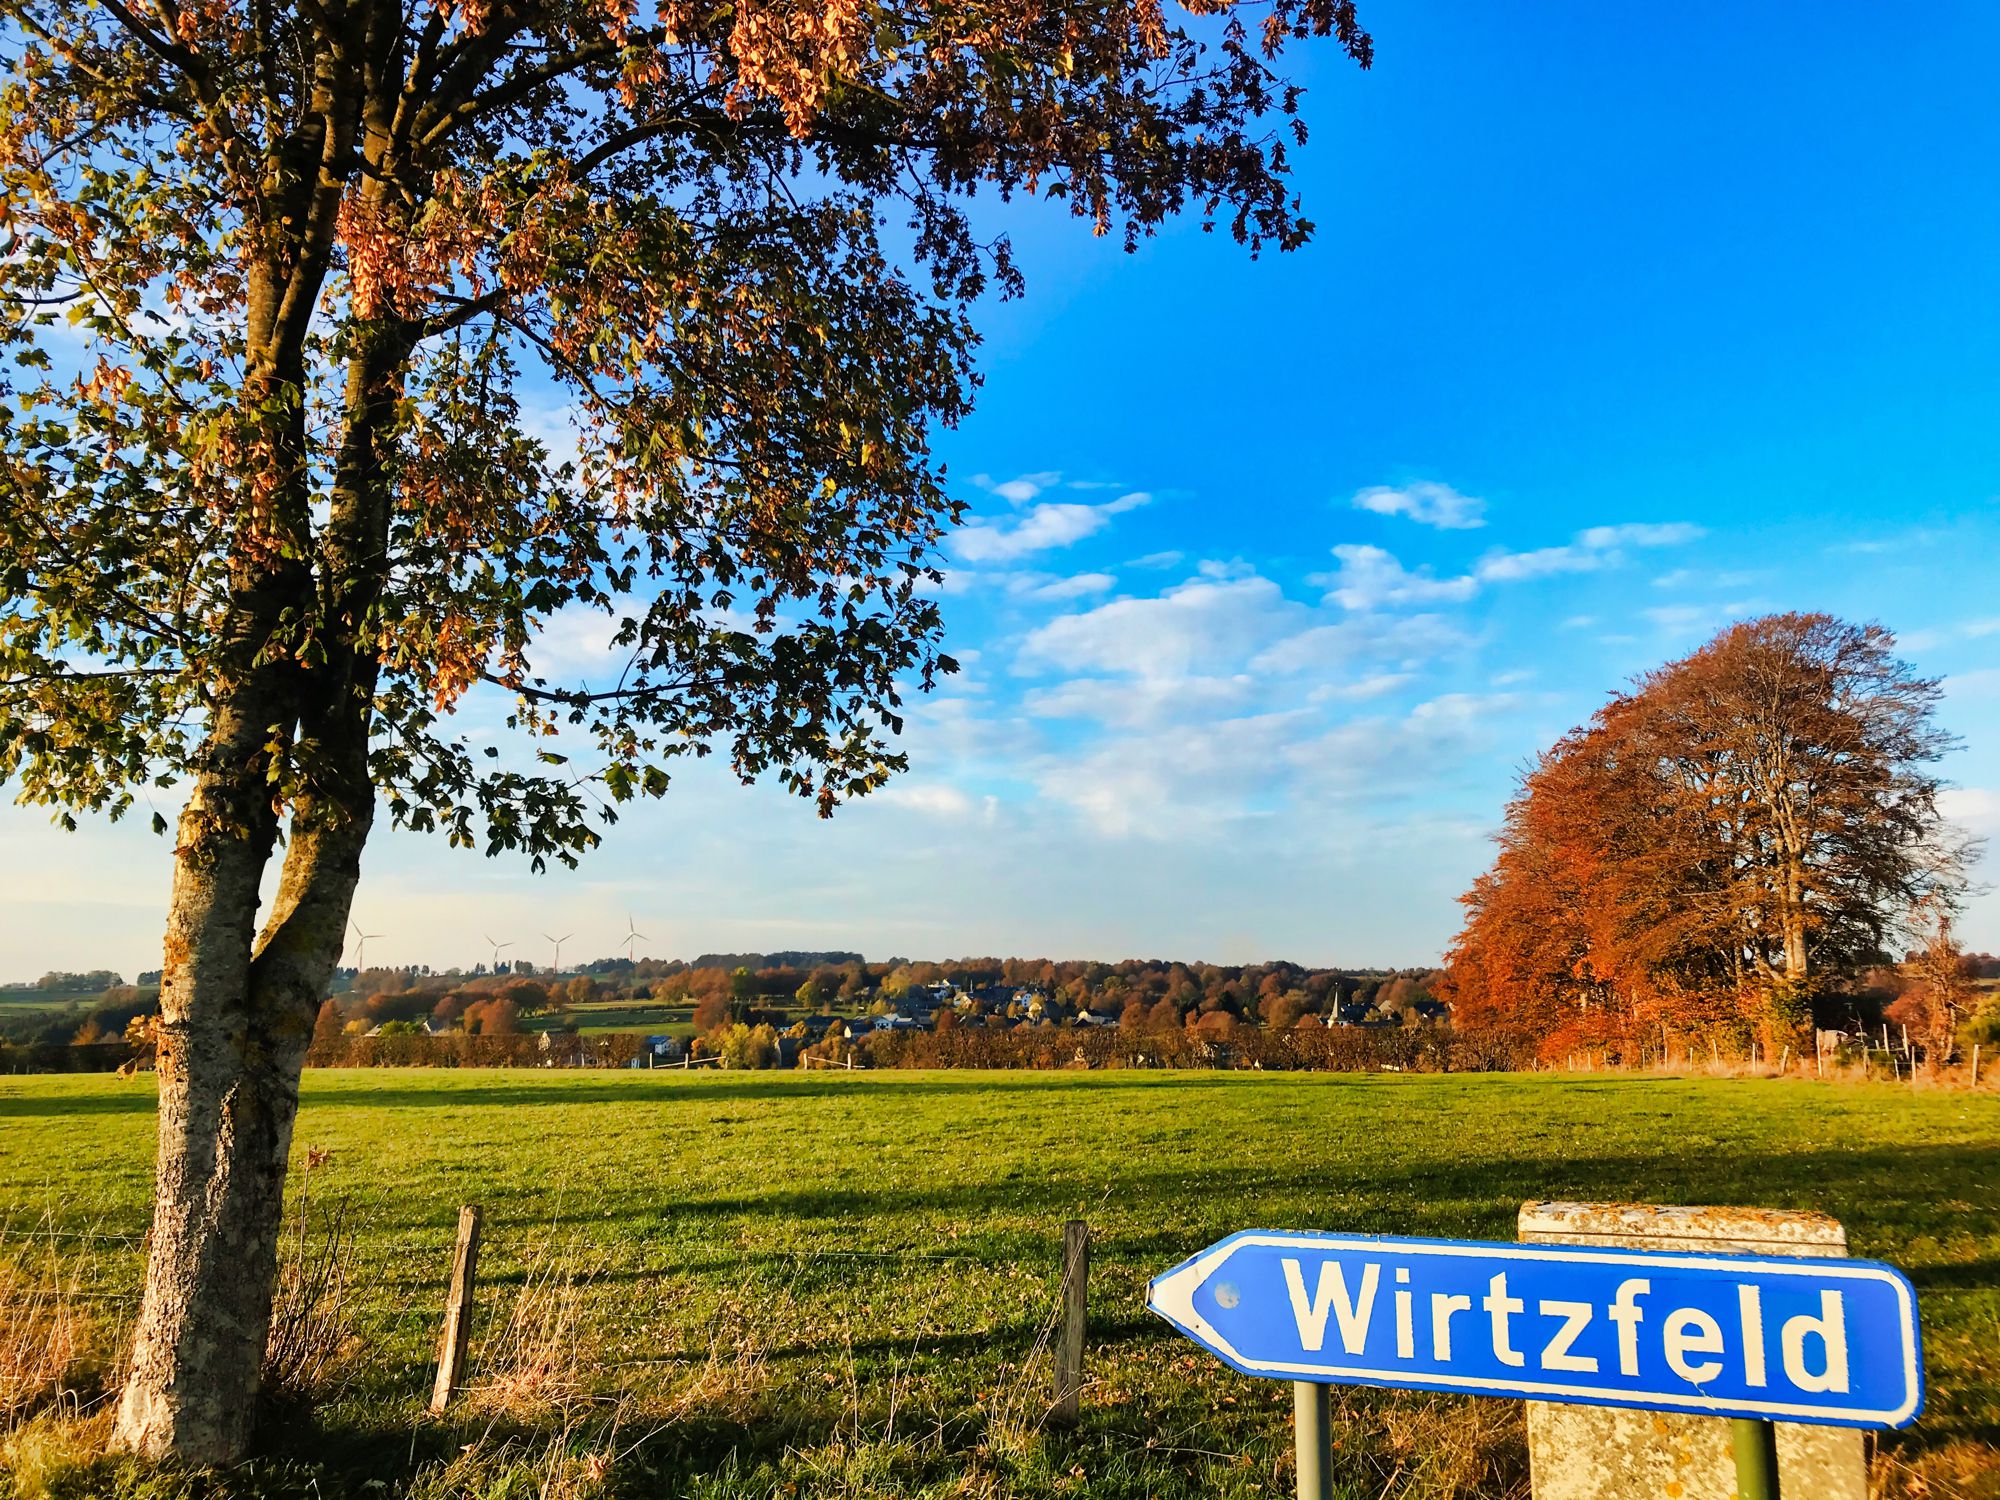 Wirtzfeld